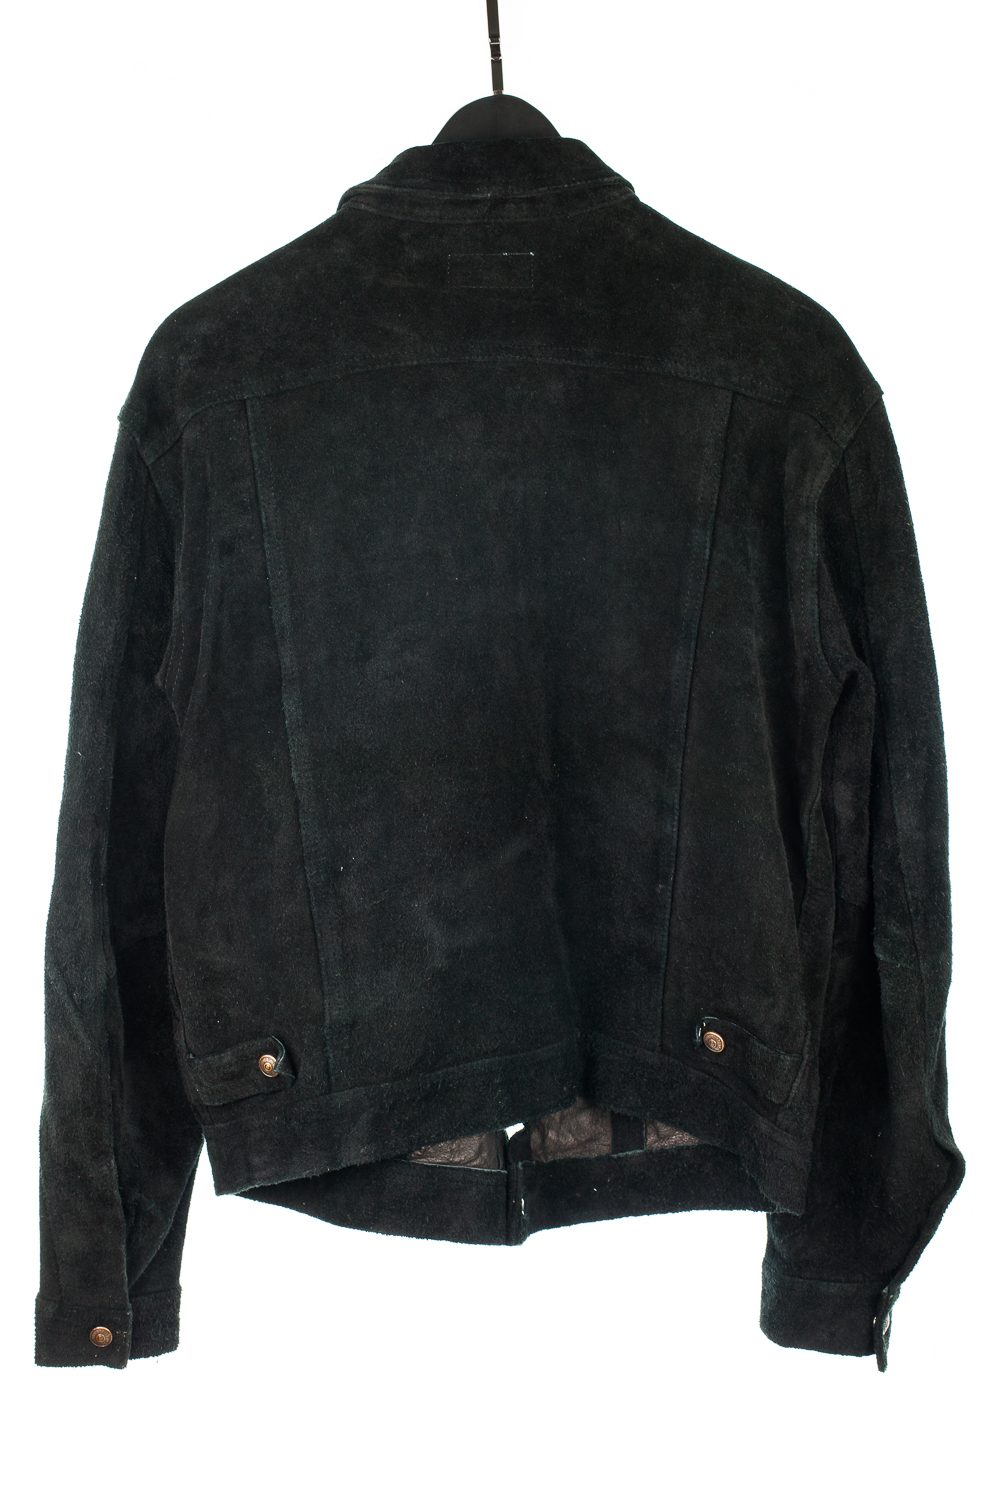 FW97 “Leaf” Suede Trucker Jacket w/ Stripe (Black)